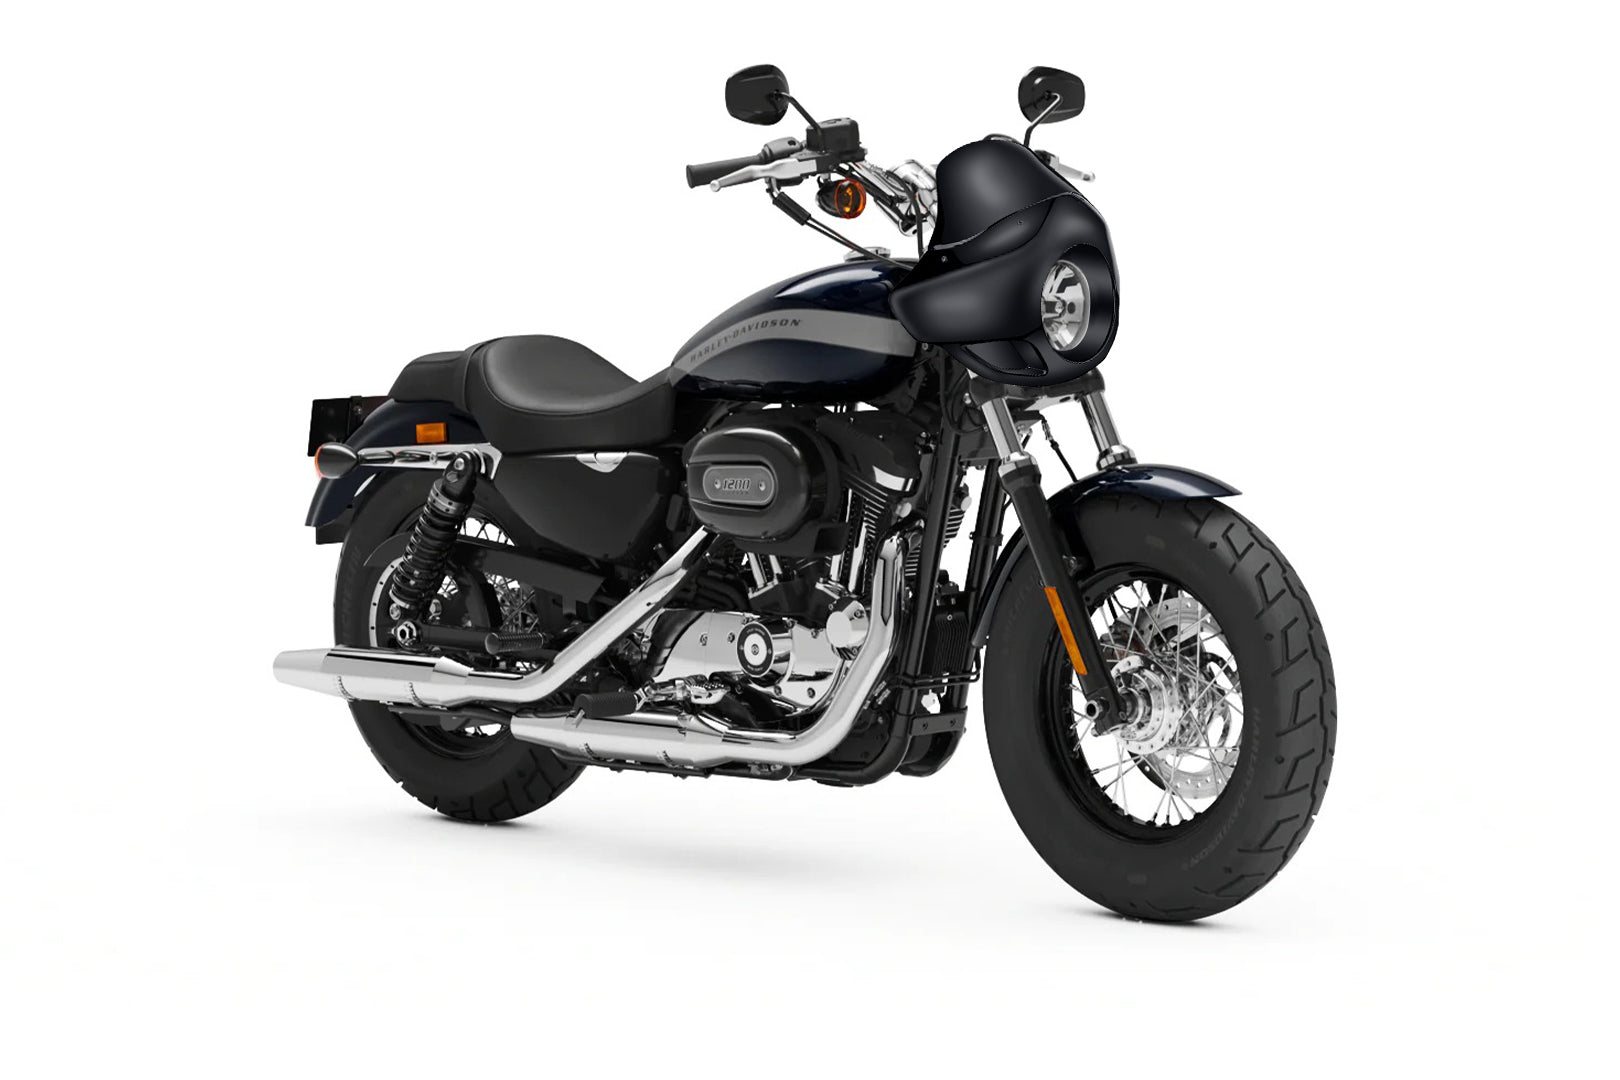 Viking Derby Motorcycle Fairing For Harley Sportster 1200 Custom XL1200C Gloss Black Bag on Bike View @expand